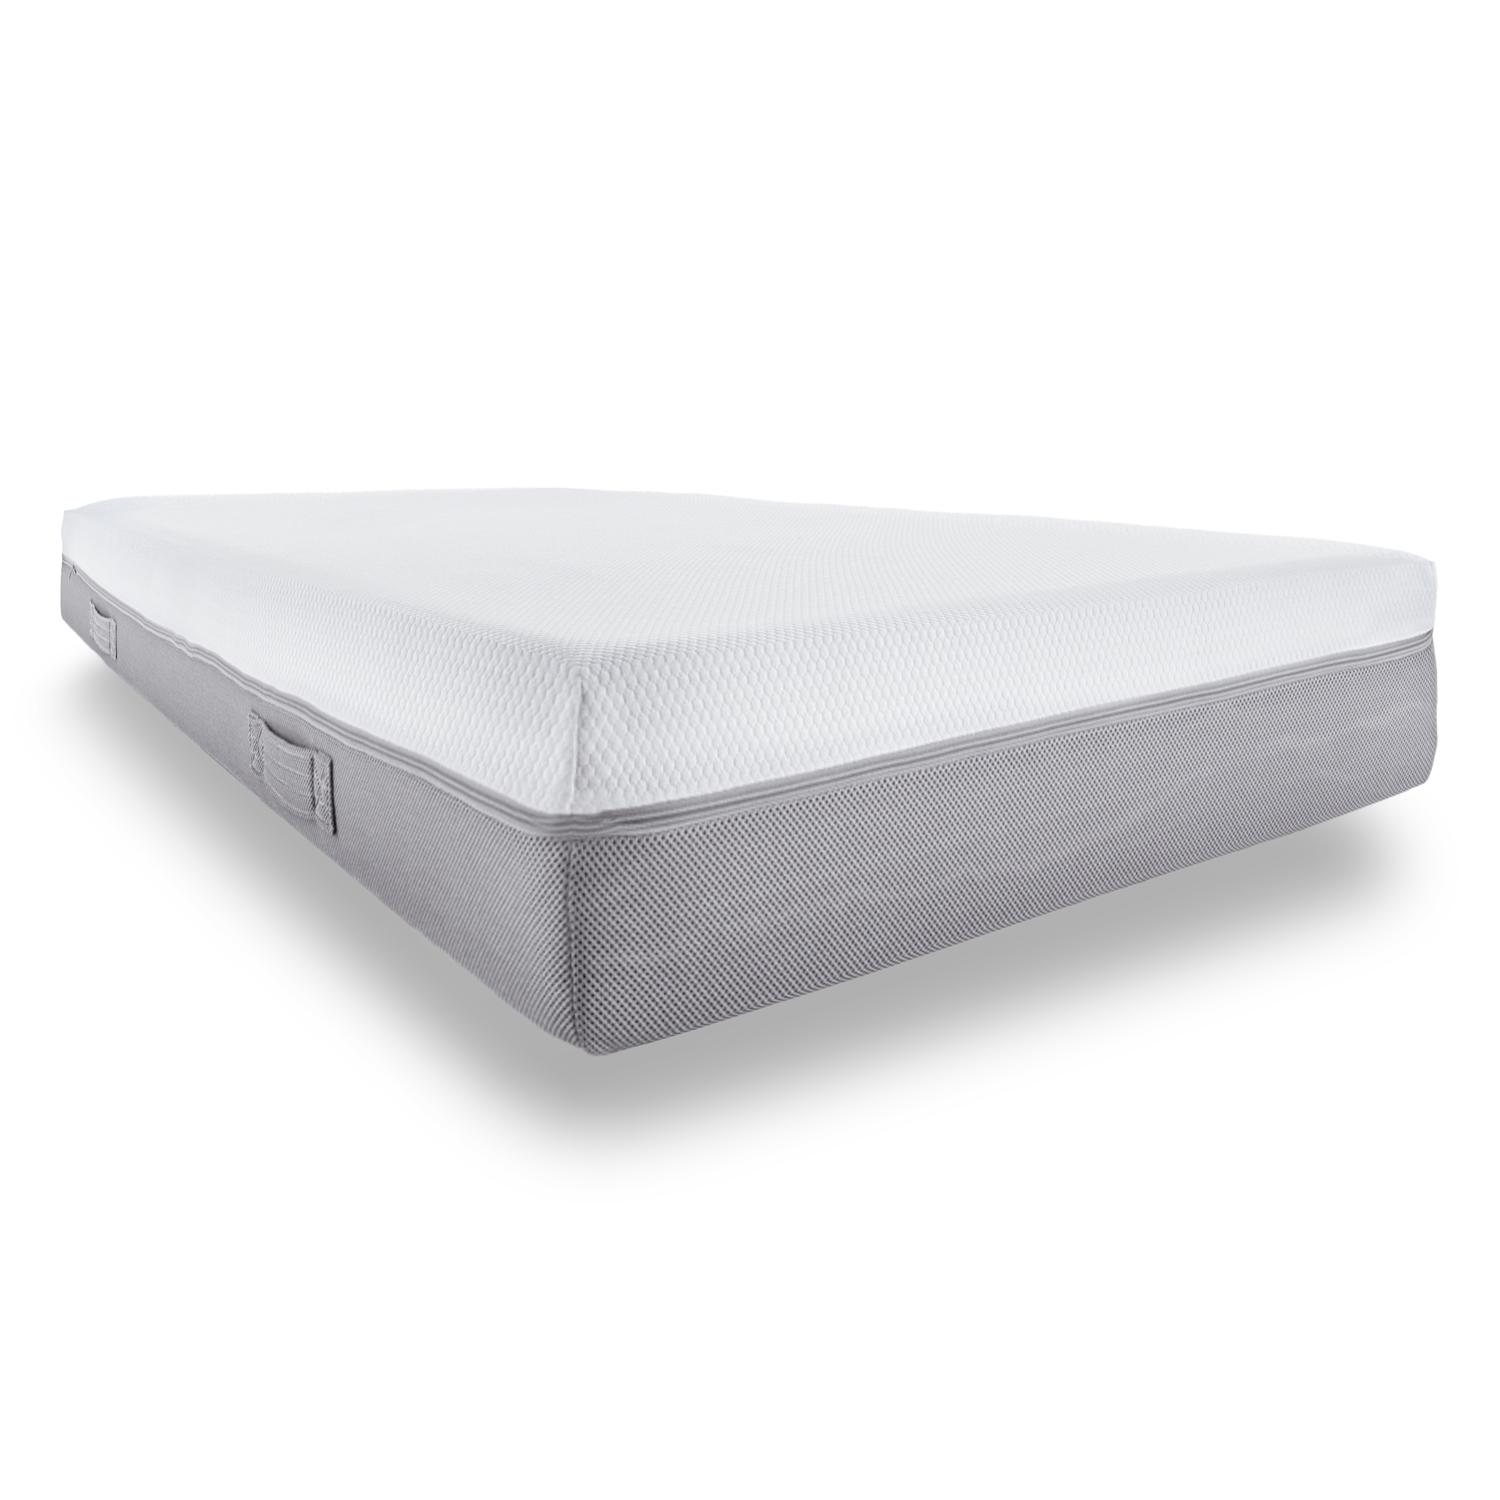 Sleezzz Premium viscoelastic mattress 90 x 200 cm, height 20 cm, firmness level H2/H3, with reversible handles